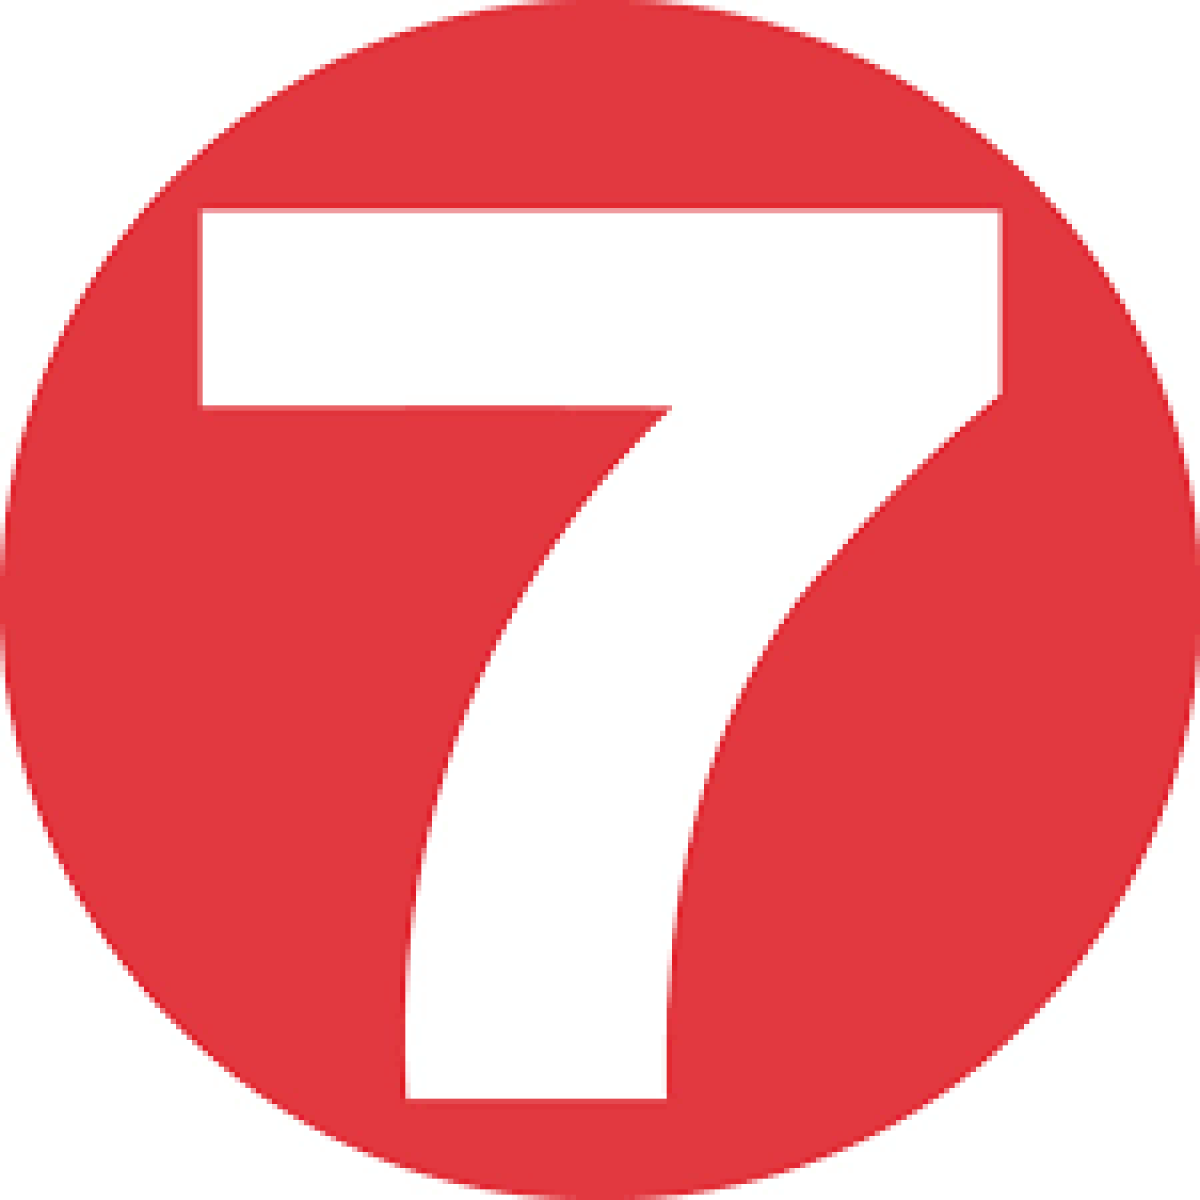 7 organization logo